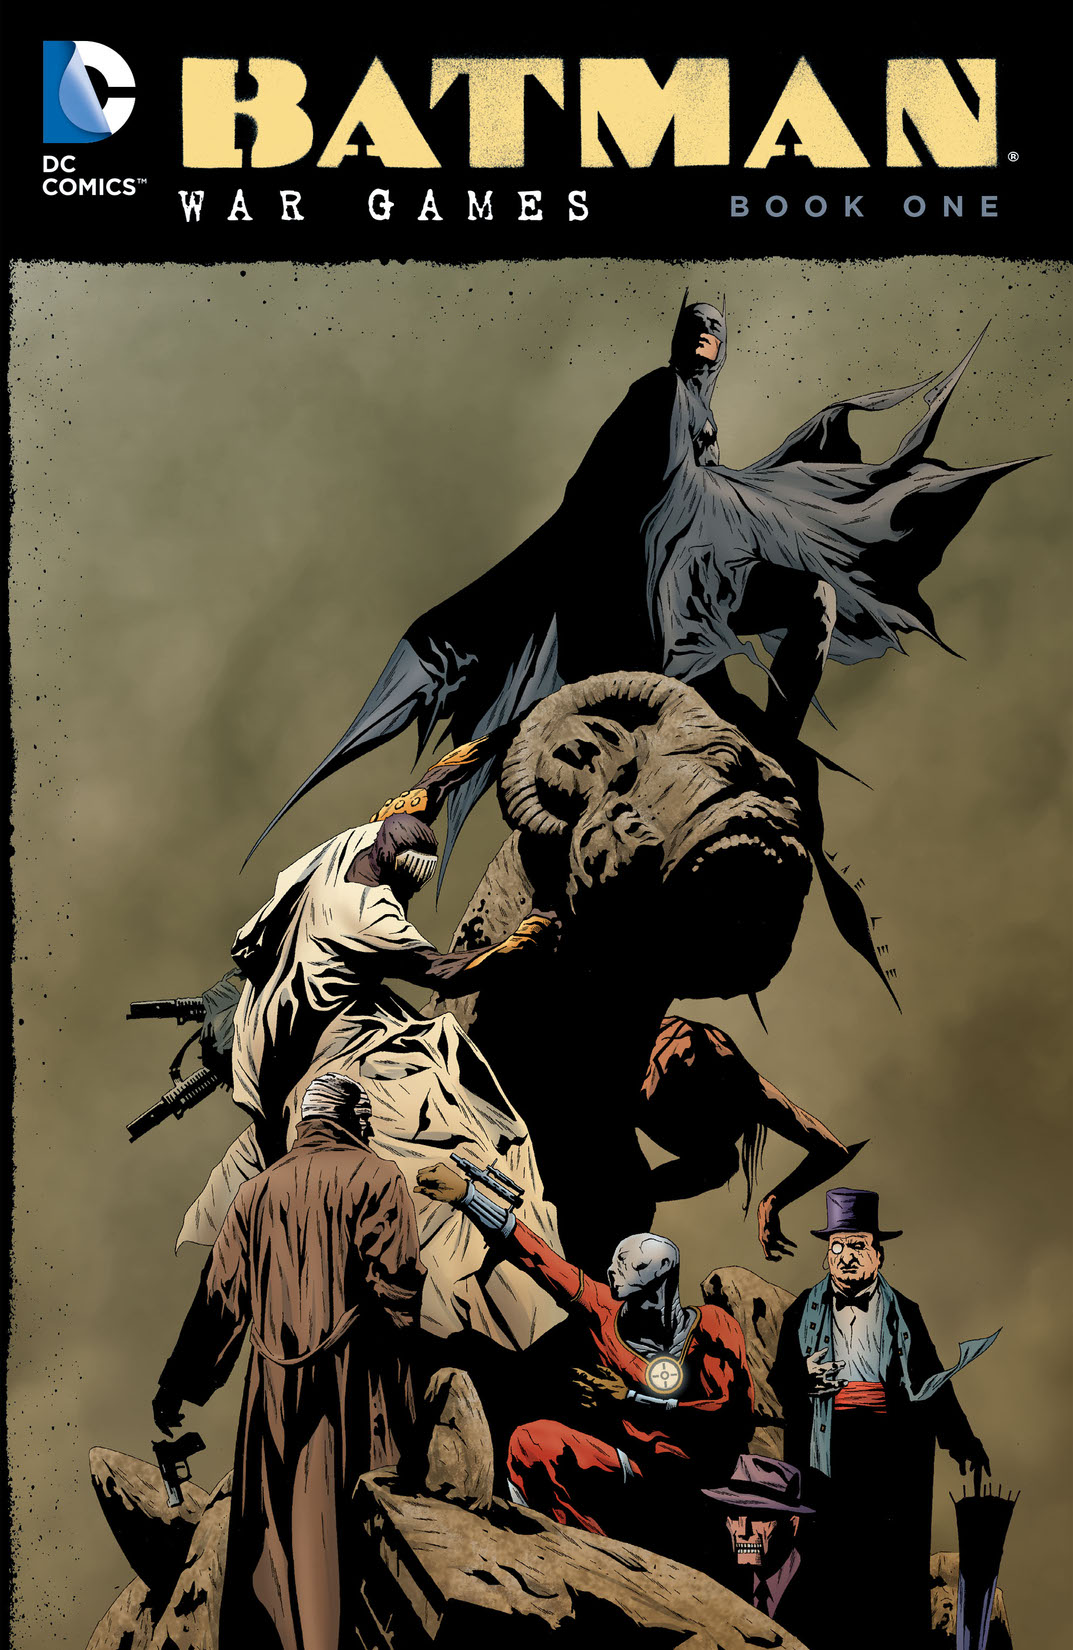 Batman: War Games Book One preview images